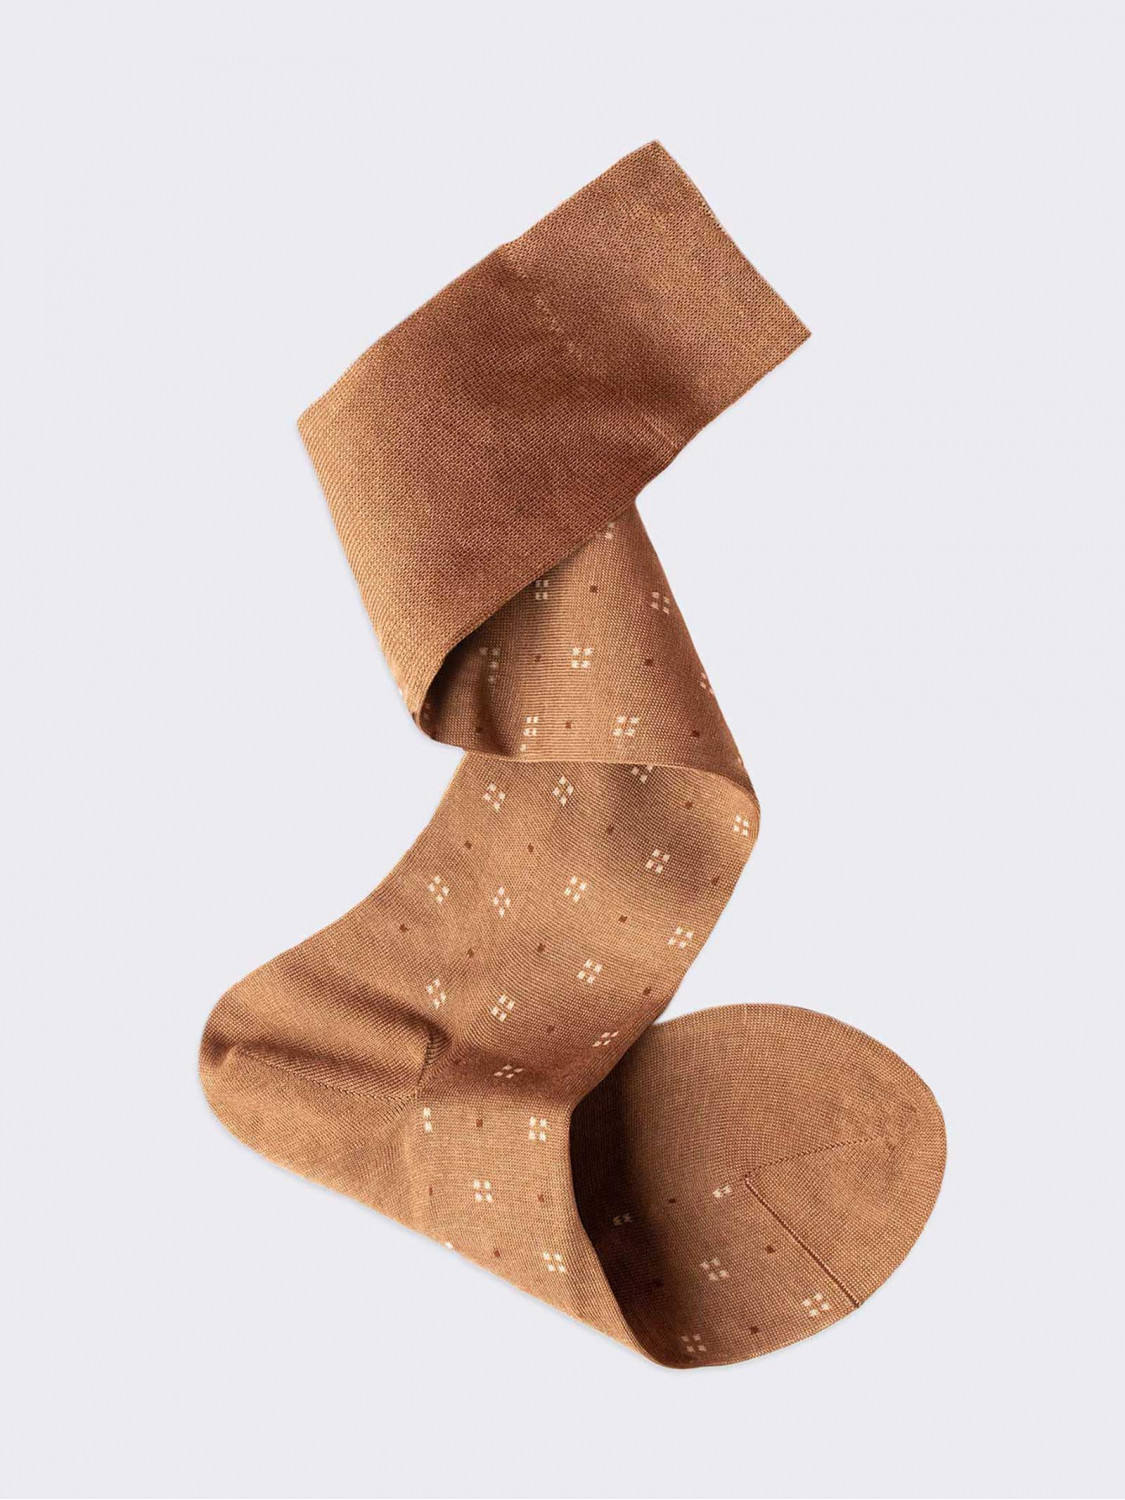 Geometric pattern Men's Knee High Socks